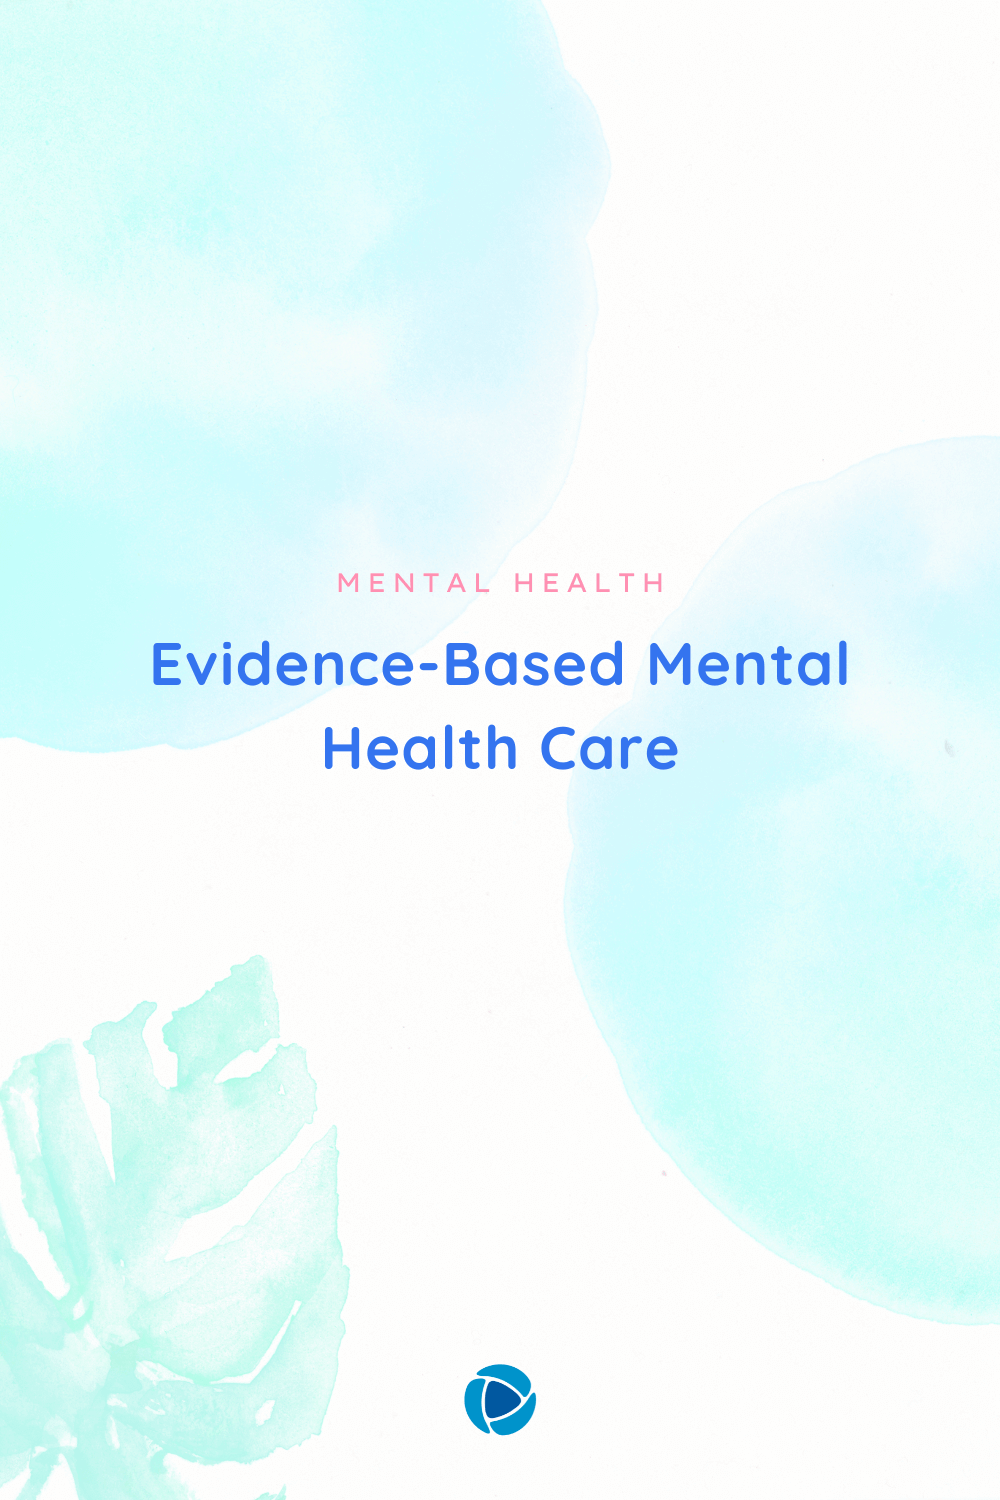 Evidence-Based Mental Health Care